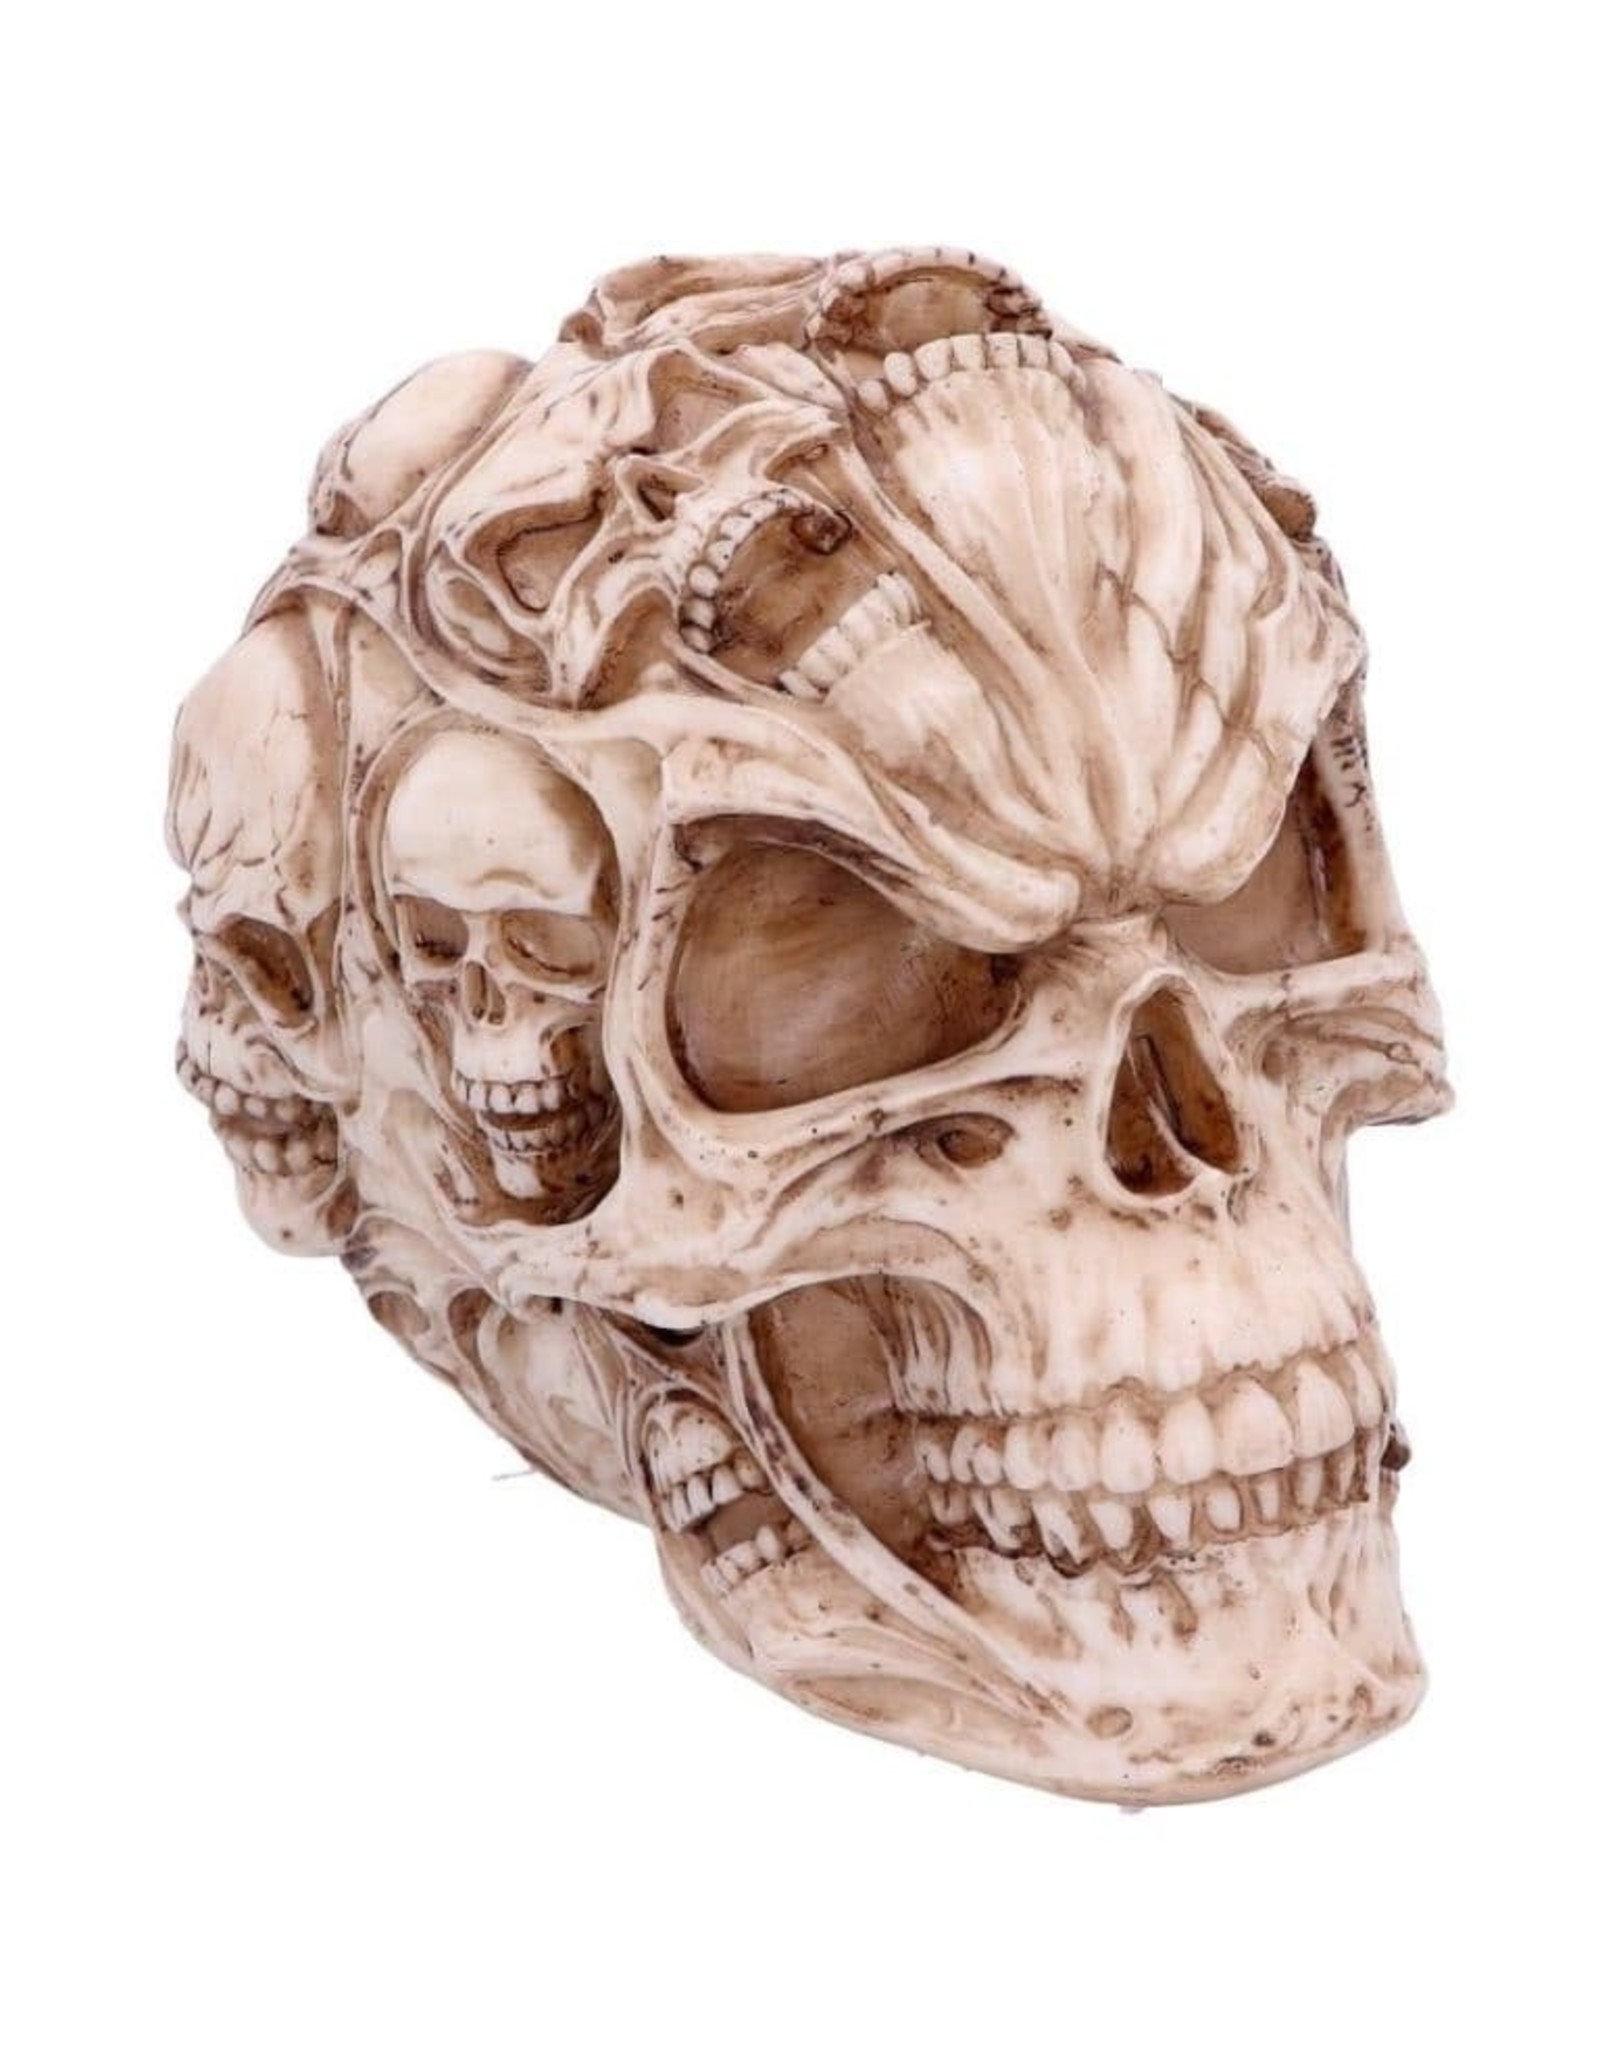 James Ryman Skulls - Skull of Skulls skull of James Rayman  by Nemesis Now